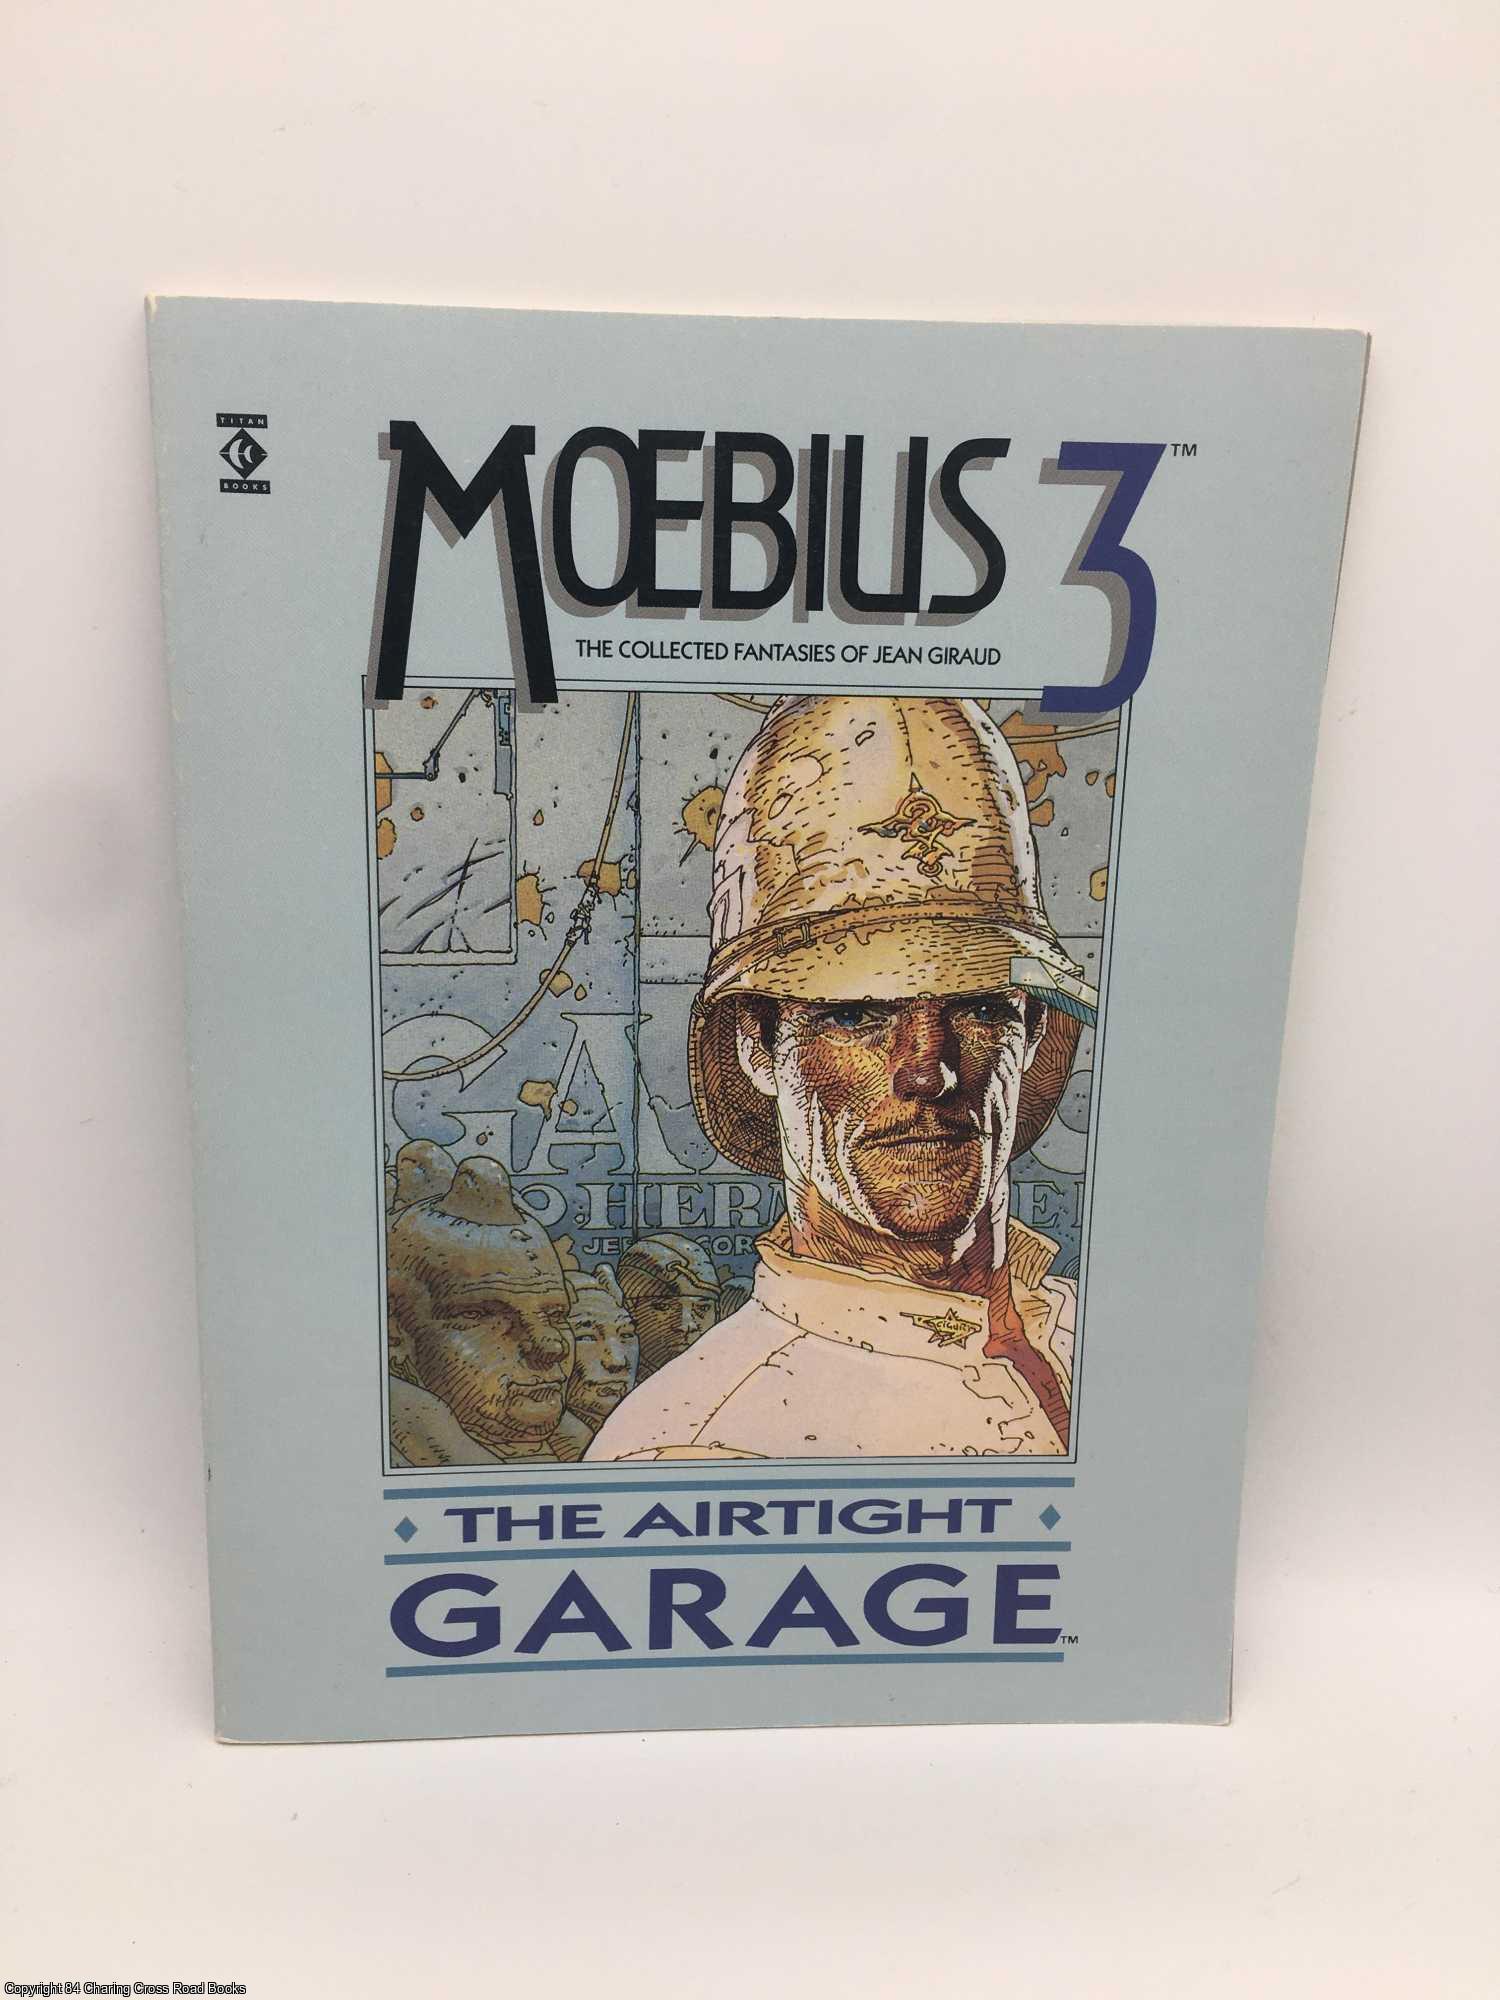 Moebius - The Airtight Garage. Moebius 3. The Collected Fantasies of Jean Giraud.